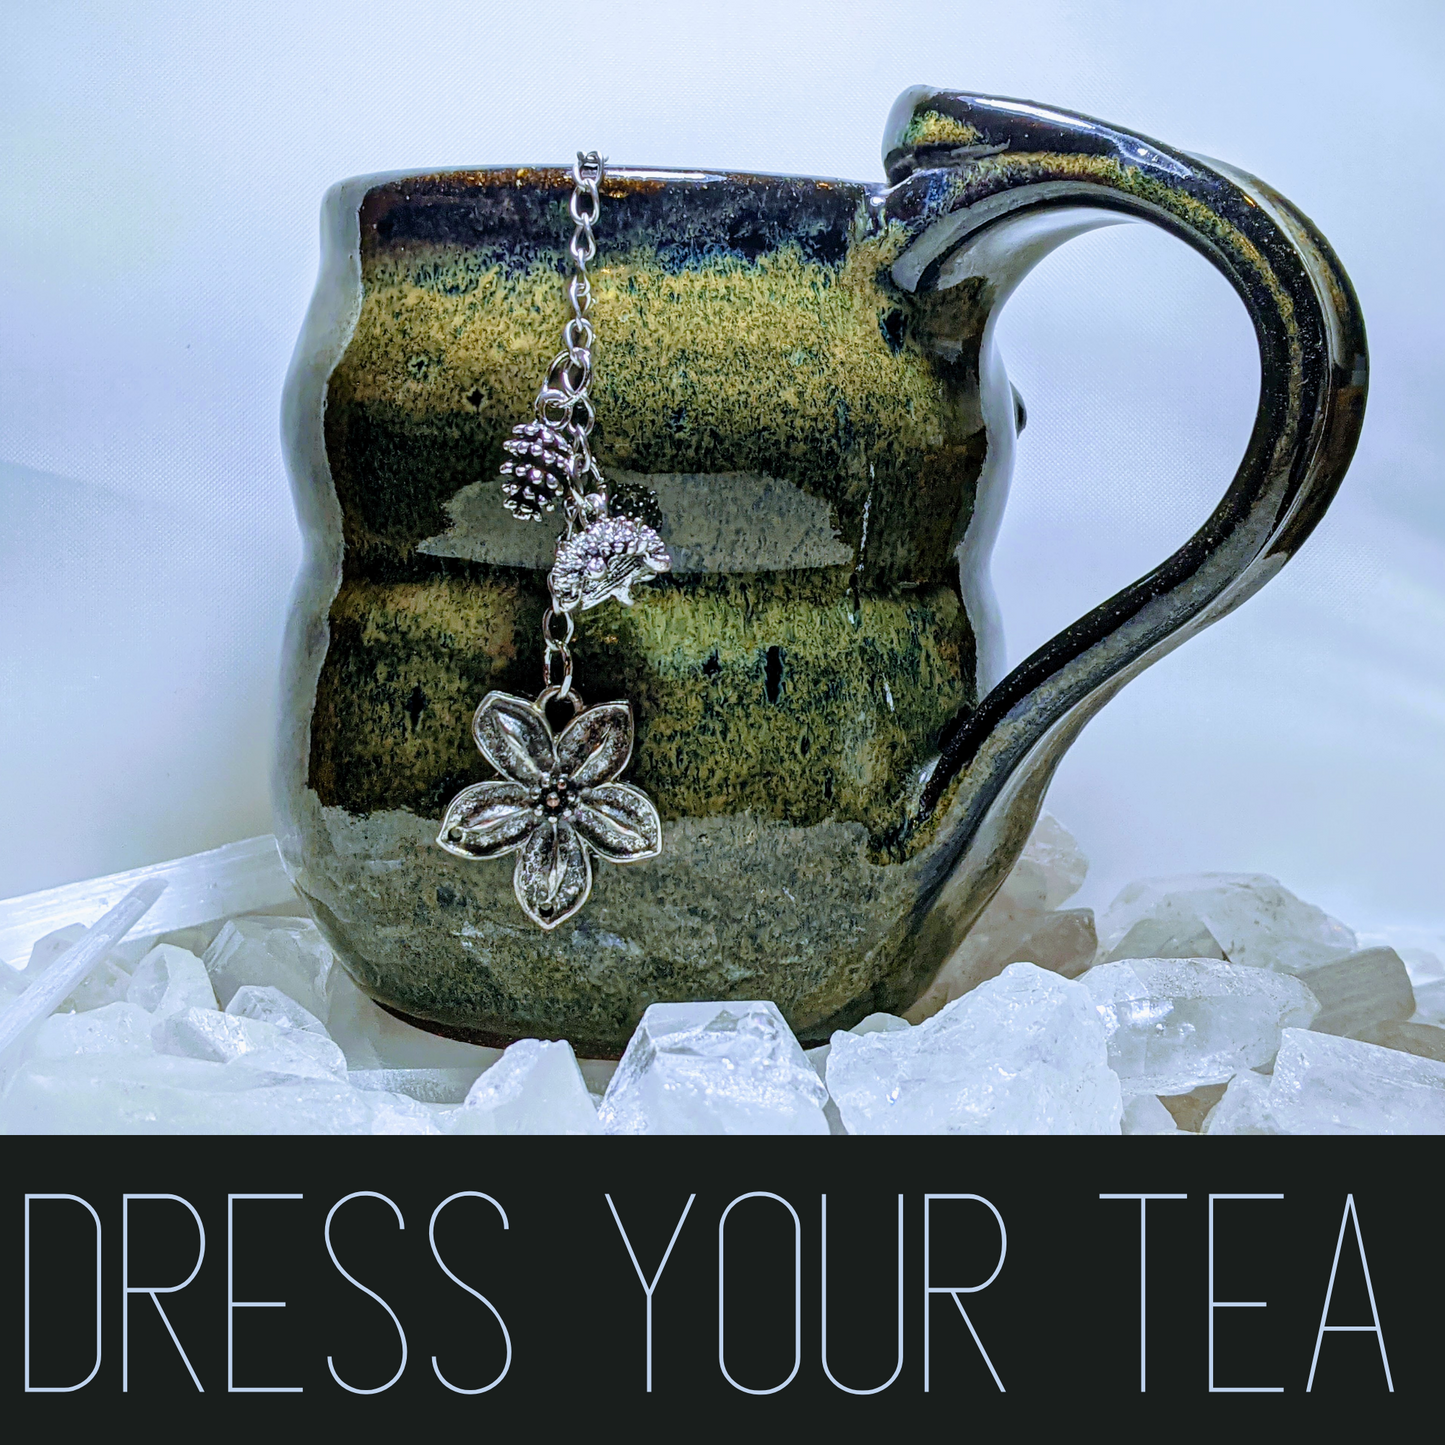 Dress Your Tea Teabling (Porcuflower tea infusion charm)